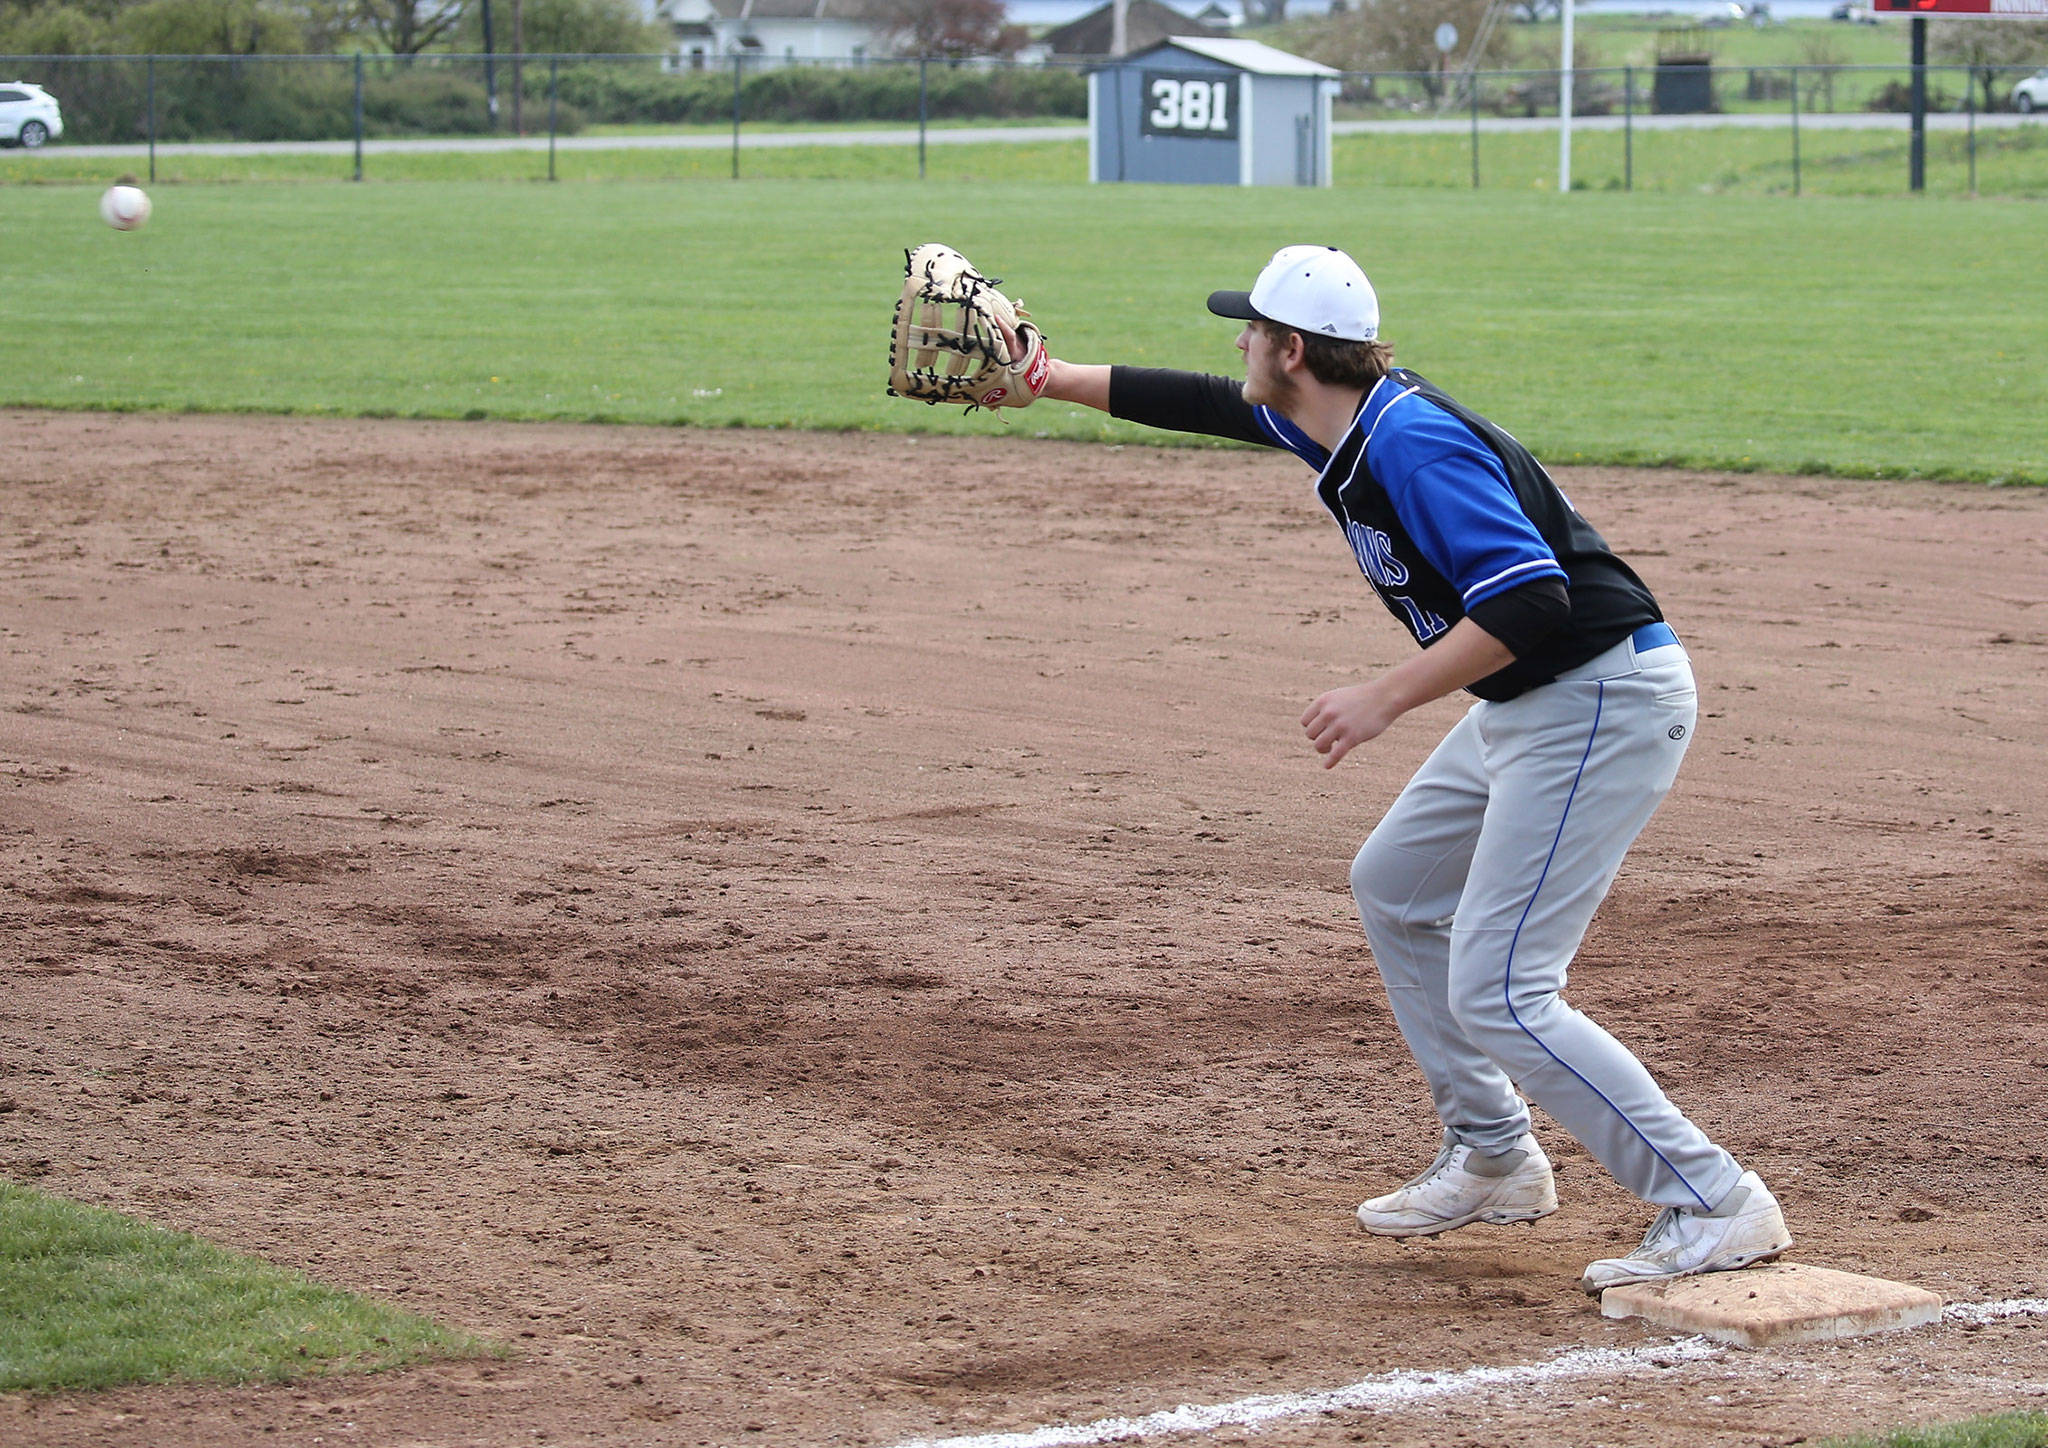 Falcon first baseman Brent Batchelor receives a throw for an out.(Photo by John Fisken)